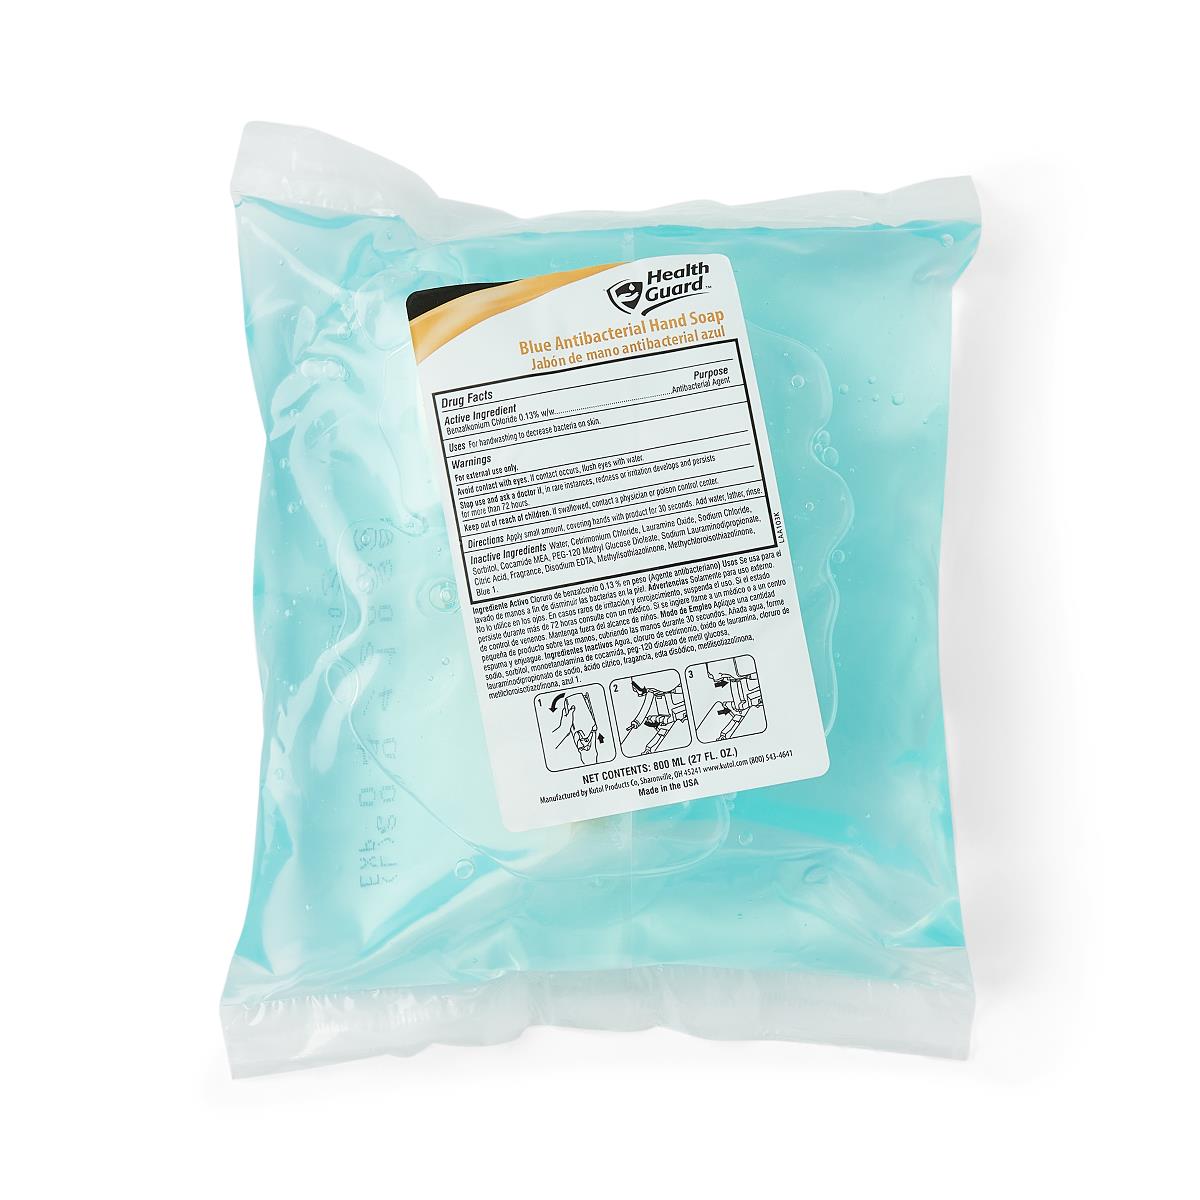 Antibacterial Hand Soap (0.13% Benzalkonium Chloride)